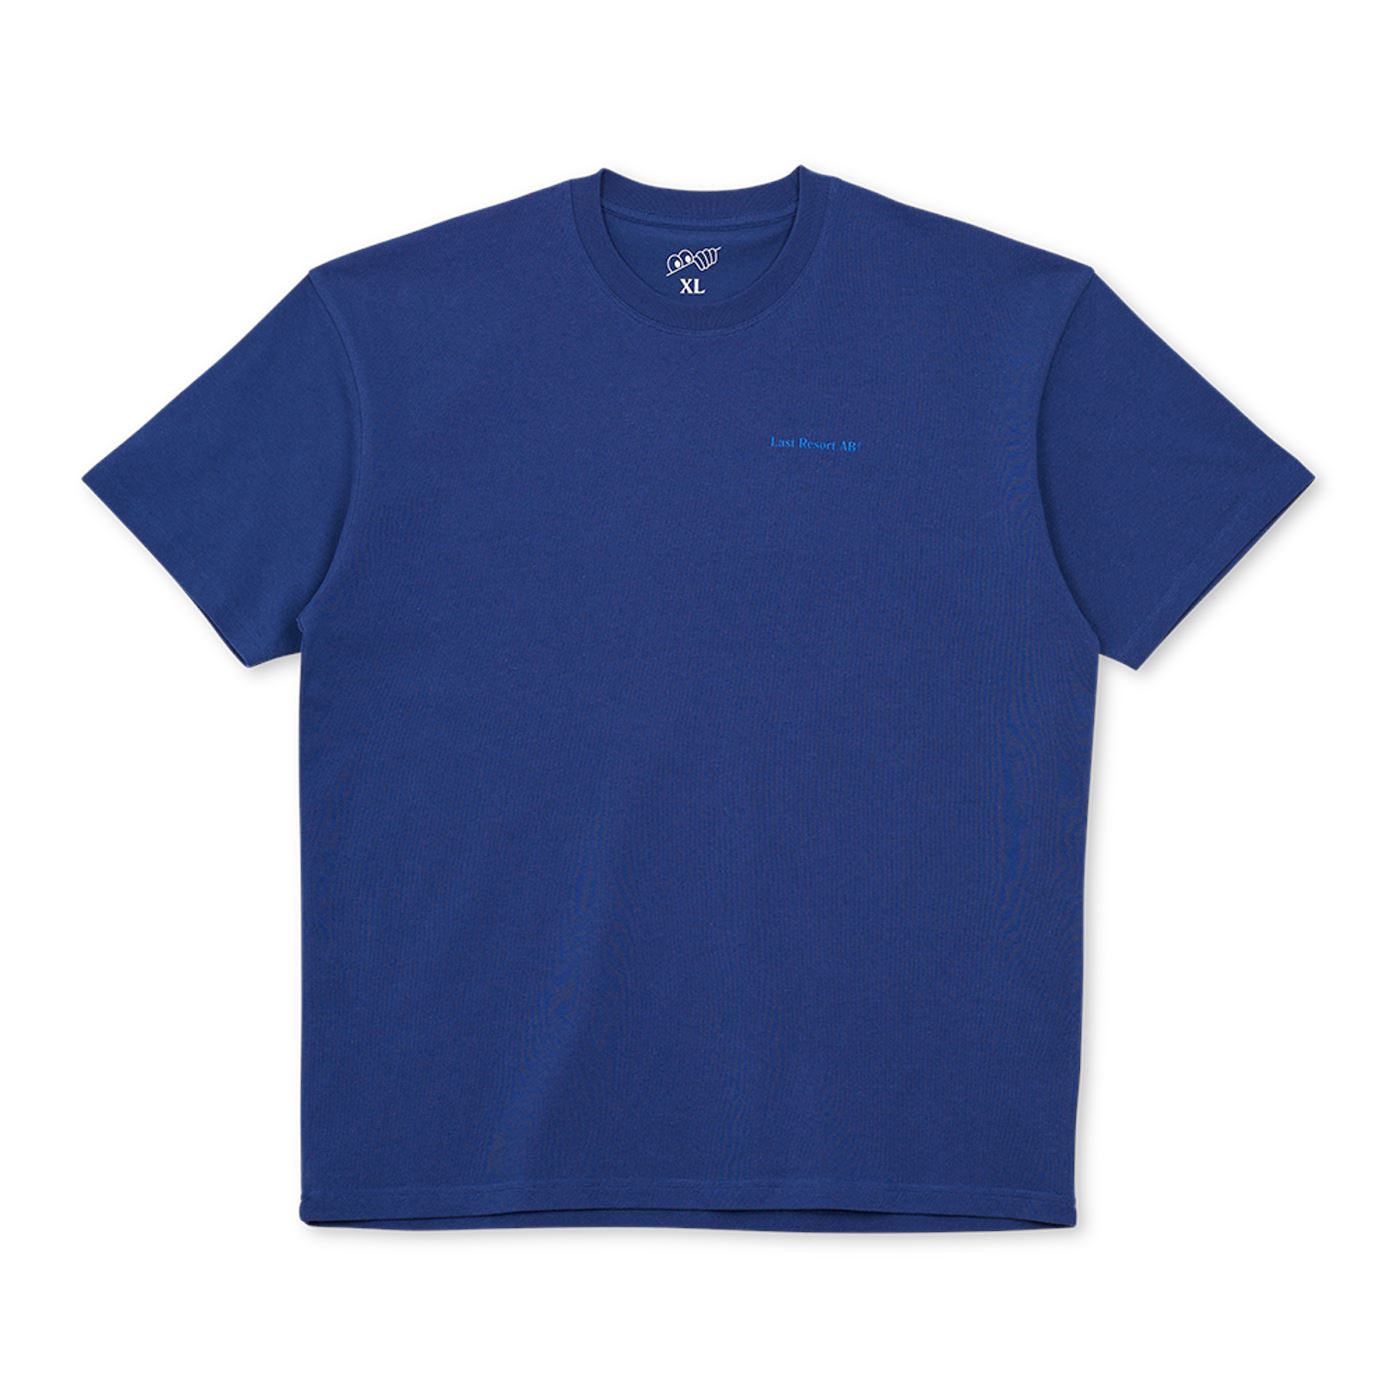 Monogrammed T-Shirts (Navy Blue)